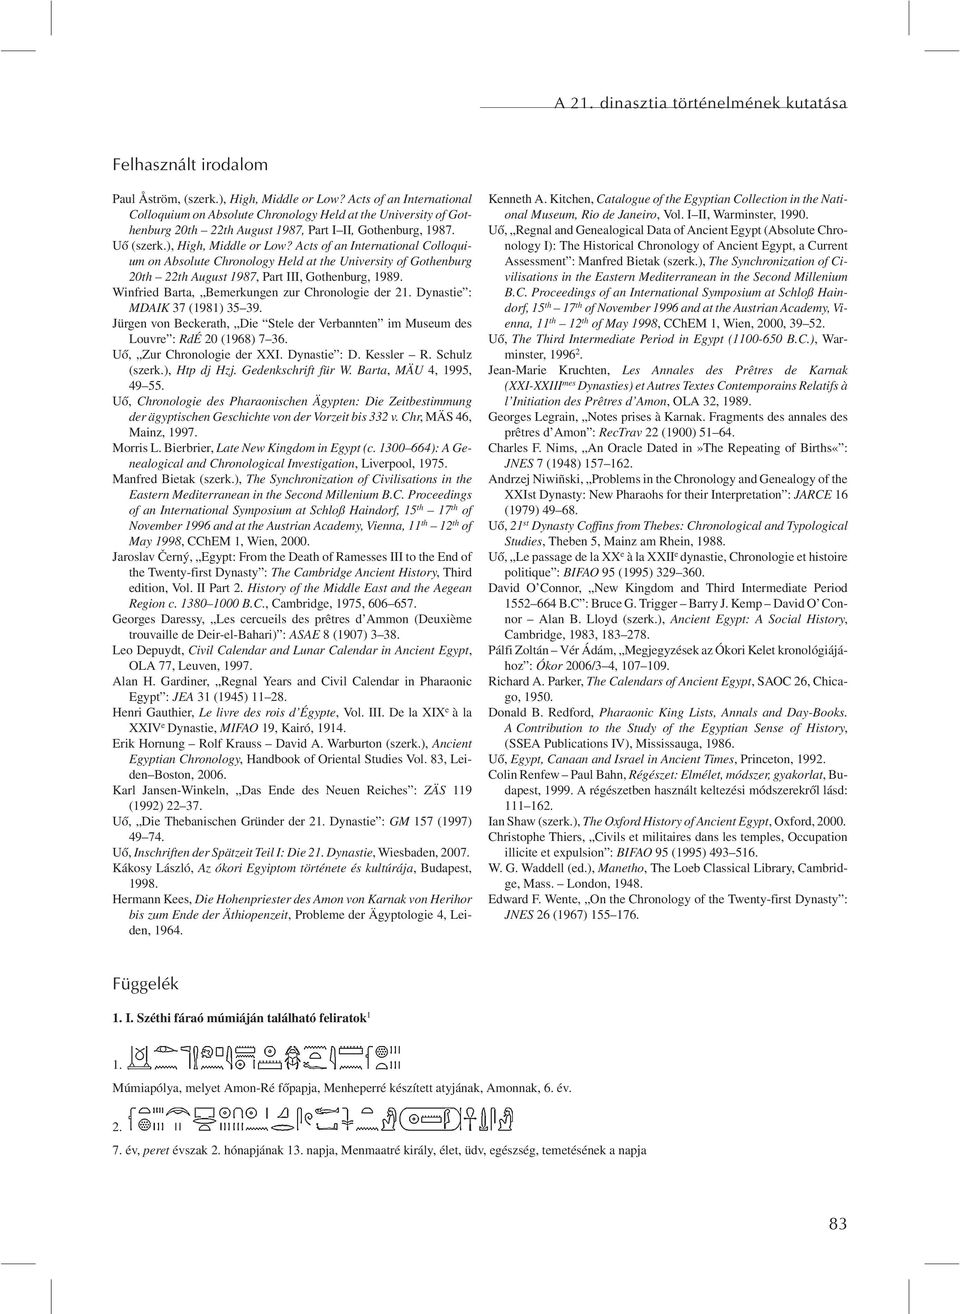 Acts of an International Colloquium on Absolute Chronology Held at the University of Gothenburg 20th 22th August 1987, Part III, Gothenburg, 1989. Winfried Barta, Bemerkungen zur Chronologie der 21.